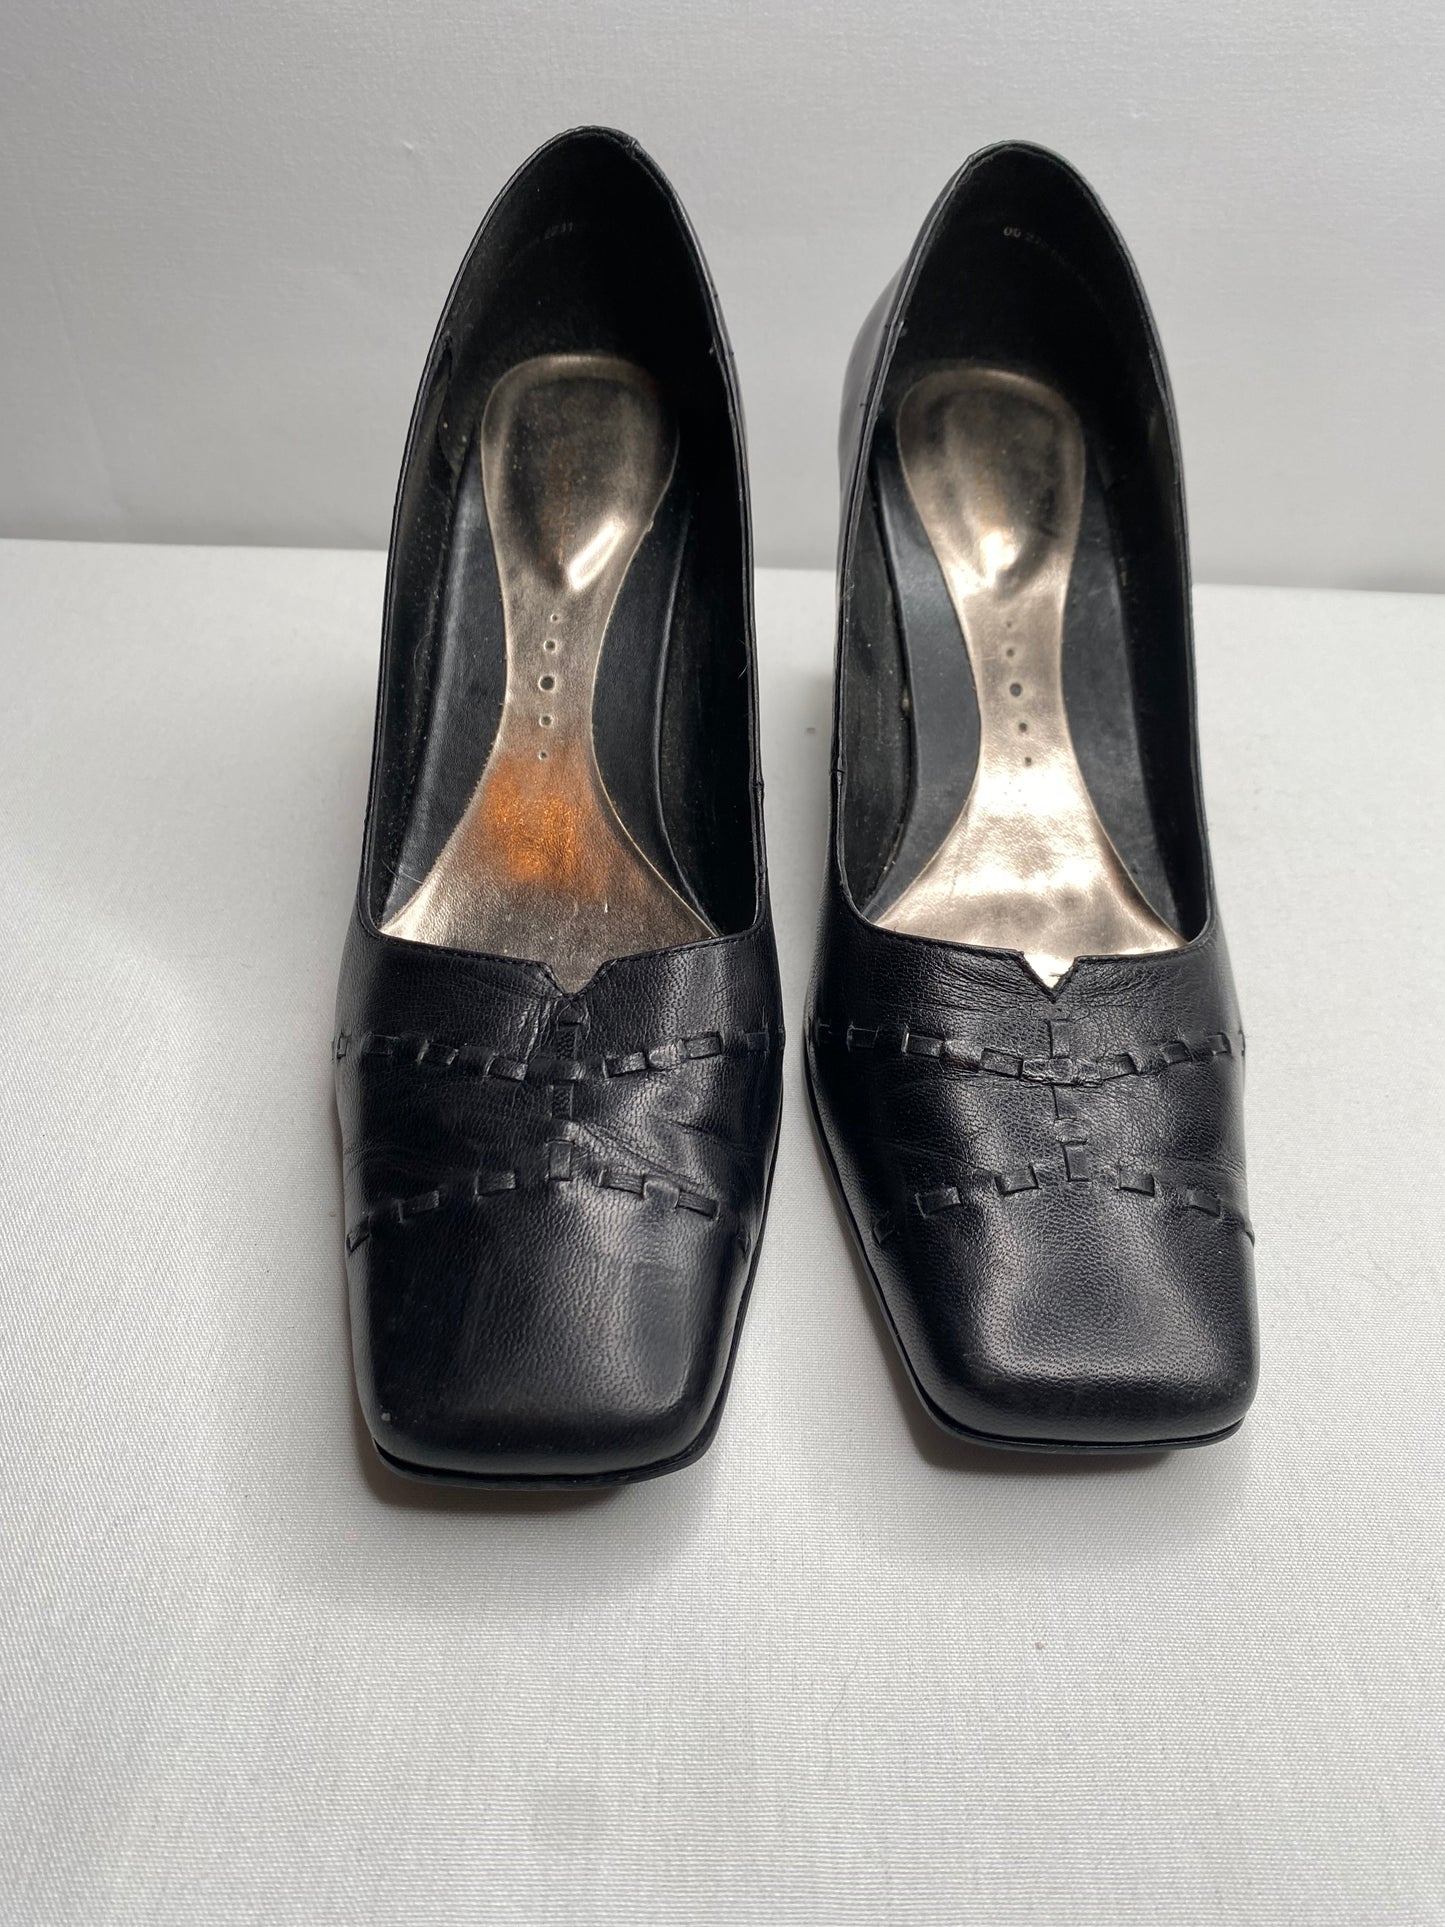 Barratts - UK6 - black leather square toe court shoes